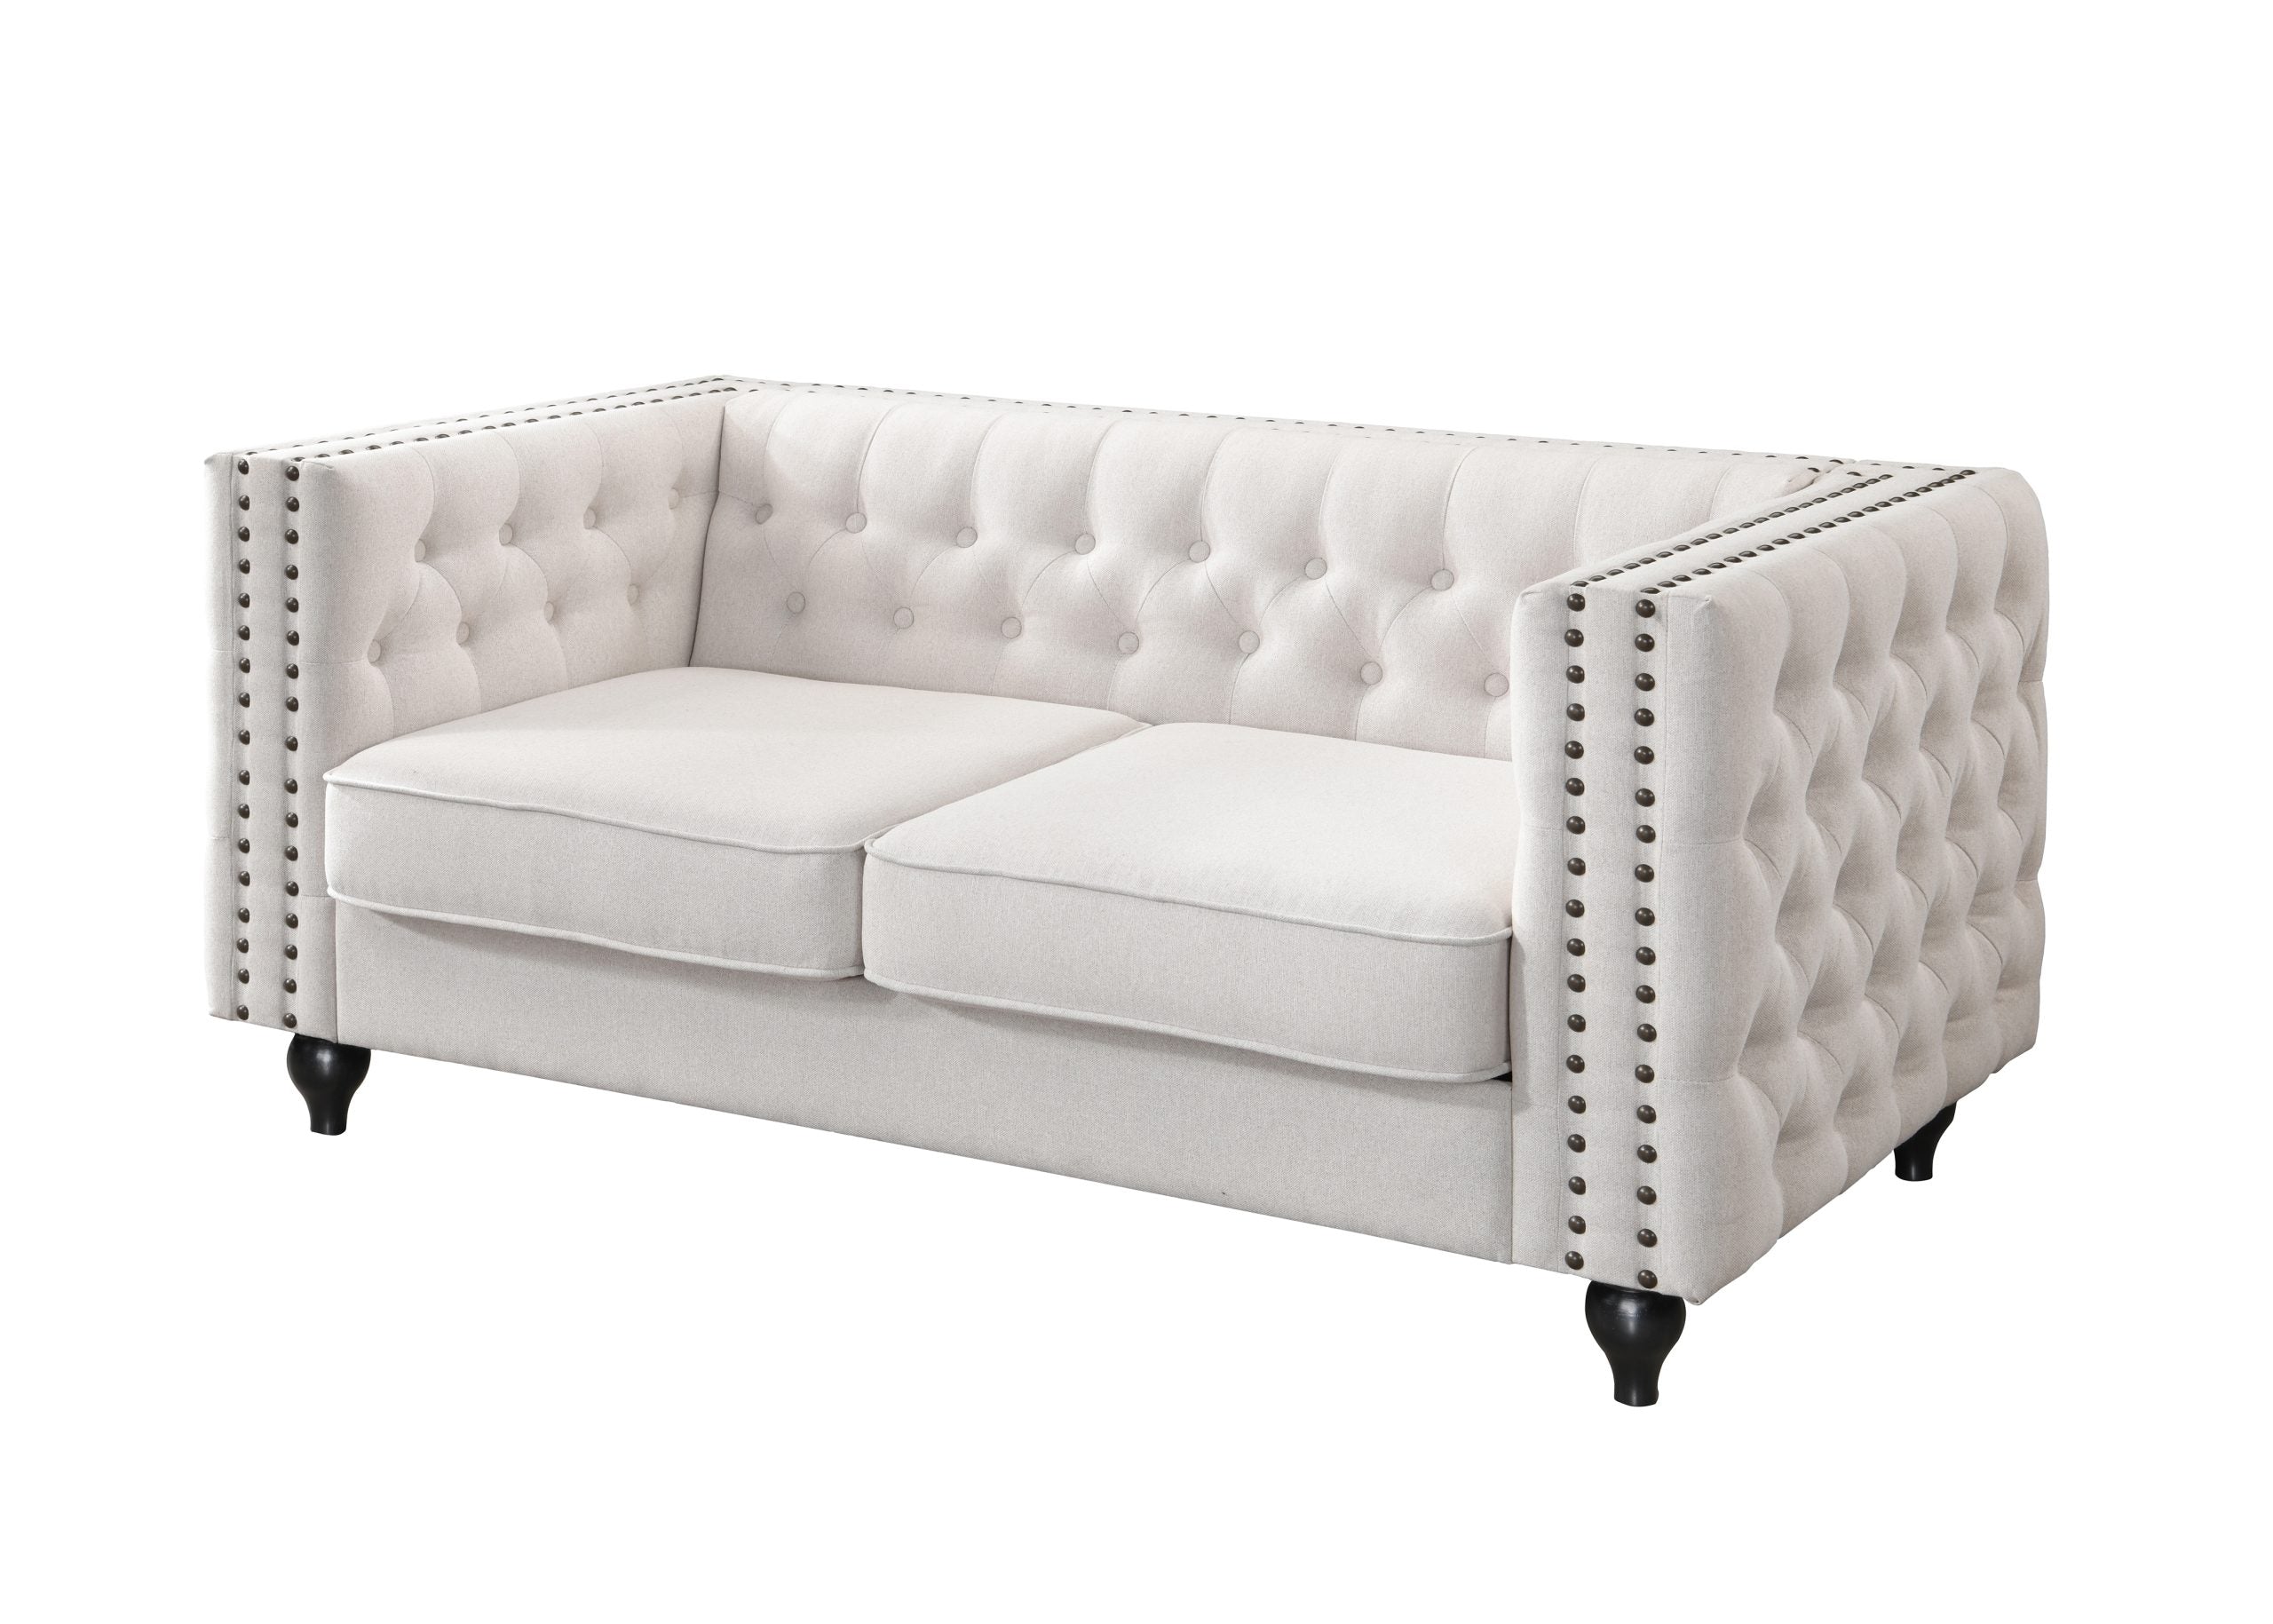 BT Mayfair Fabric Upholstered 2 Seater Sofa